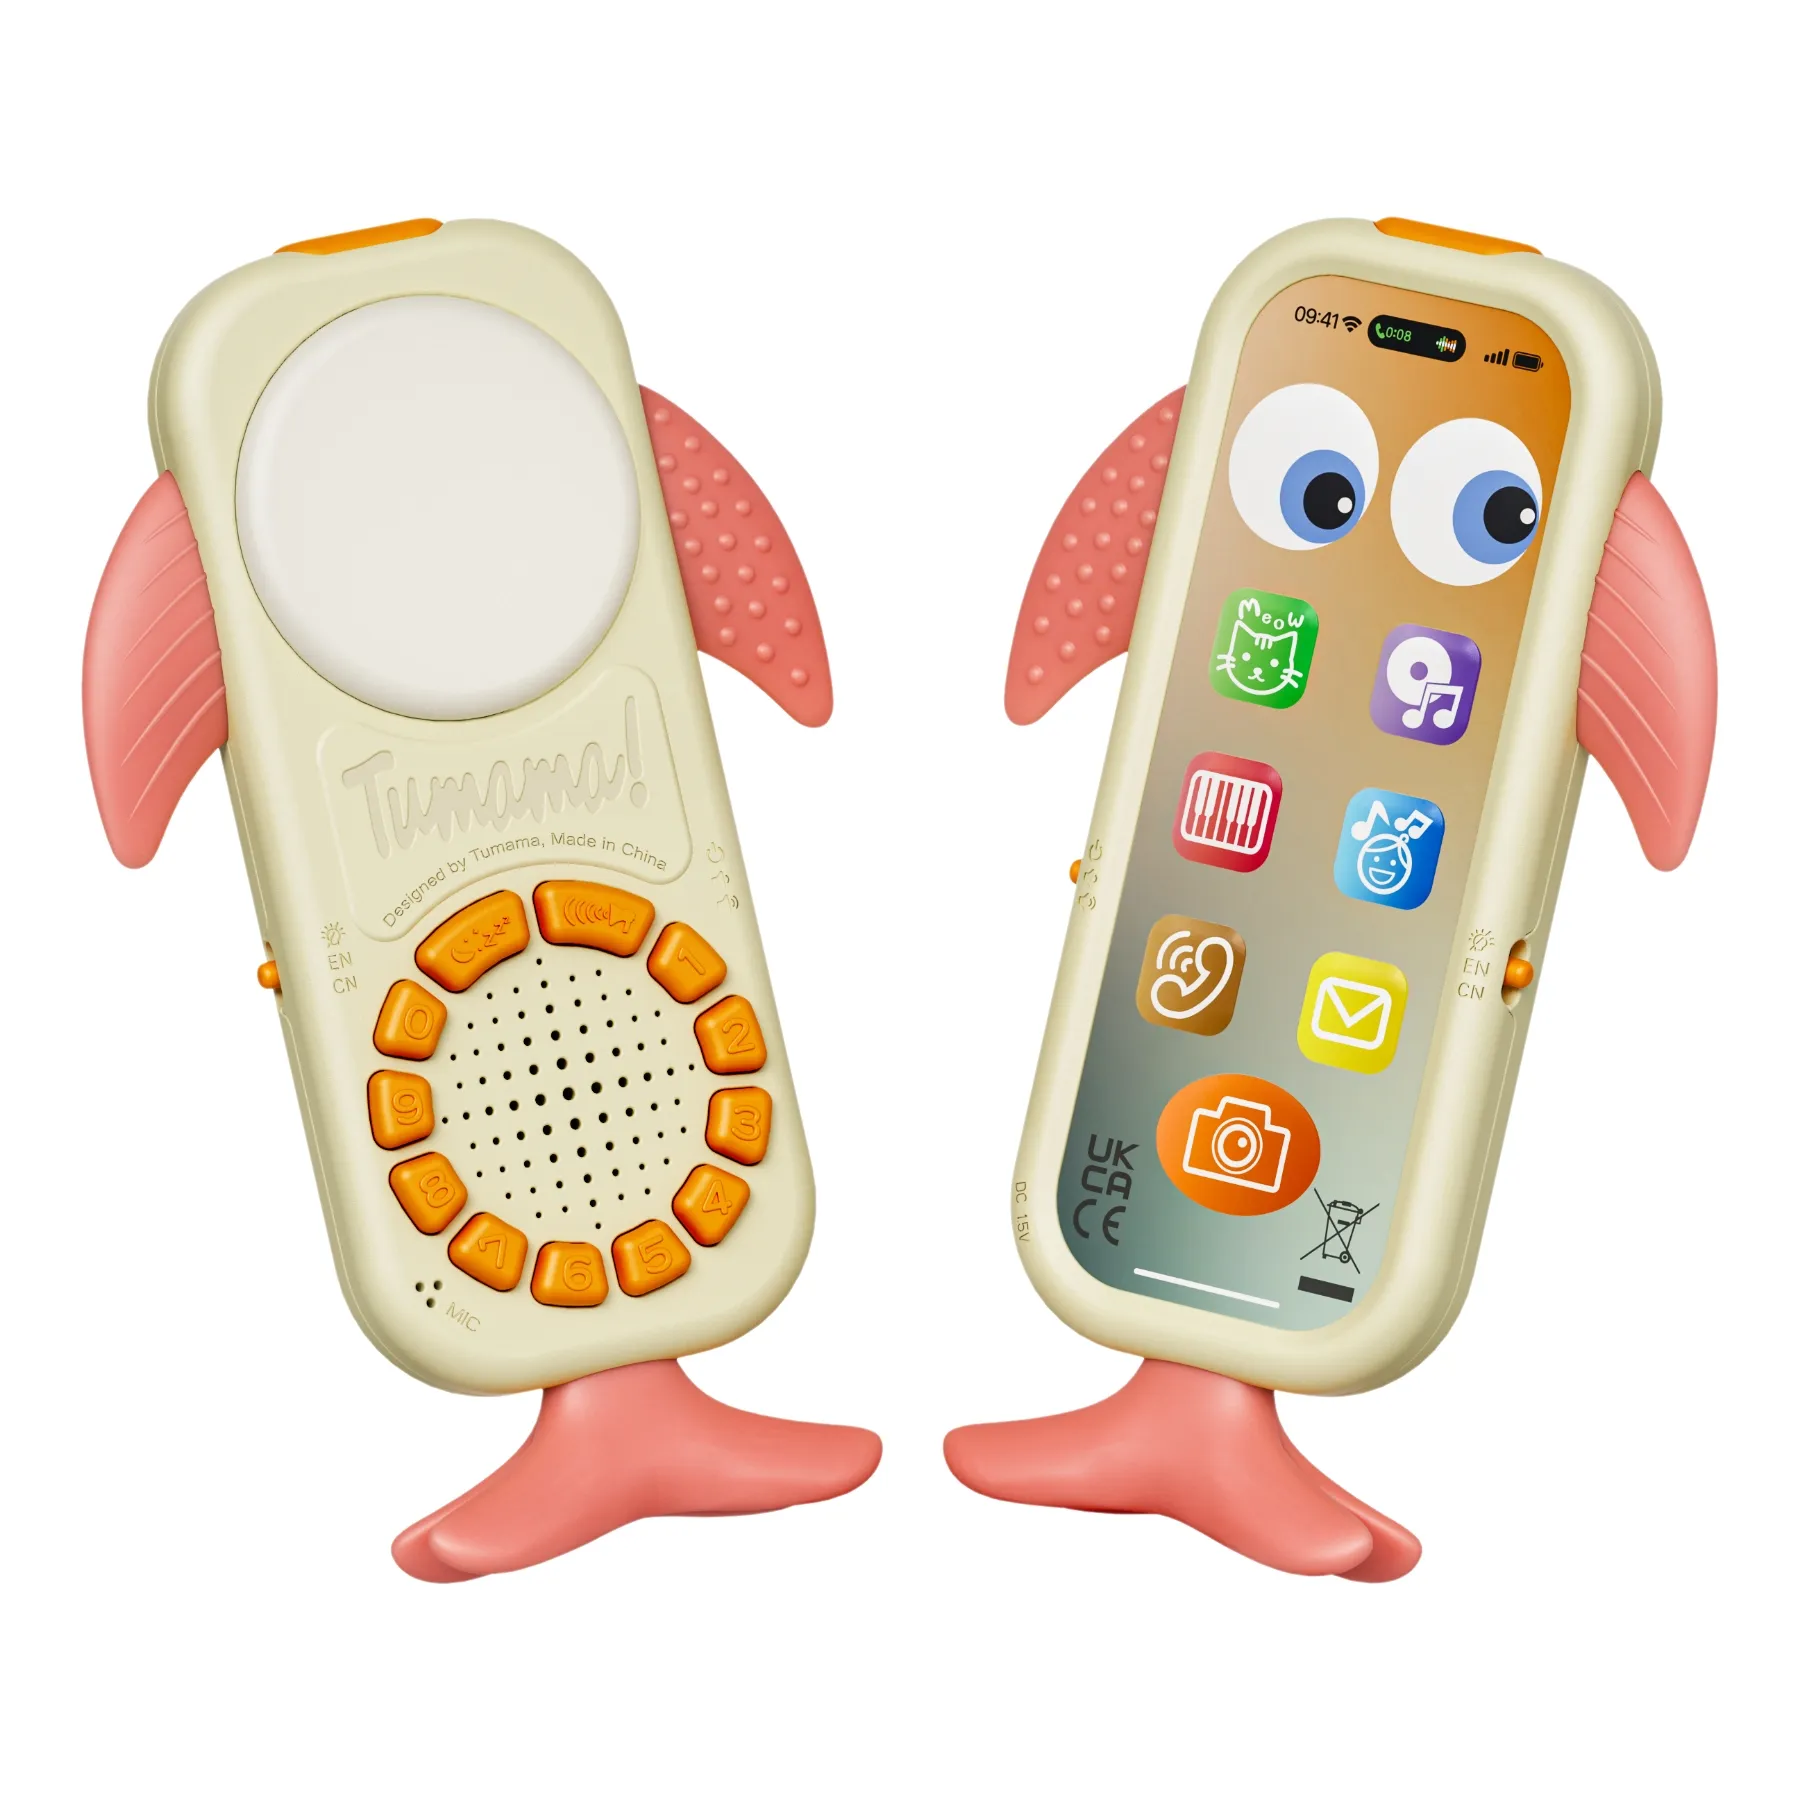 Tumamaキッズクジラデザインミュージカル携帯電話キッズラーニングスマートフォンおもちゃ録音ベビーミニ携帯電話おもちゃ